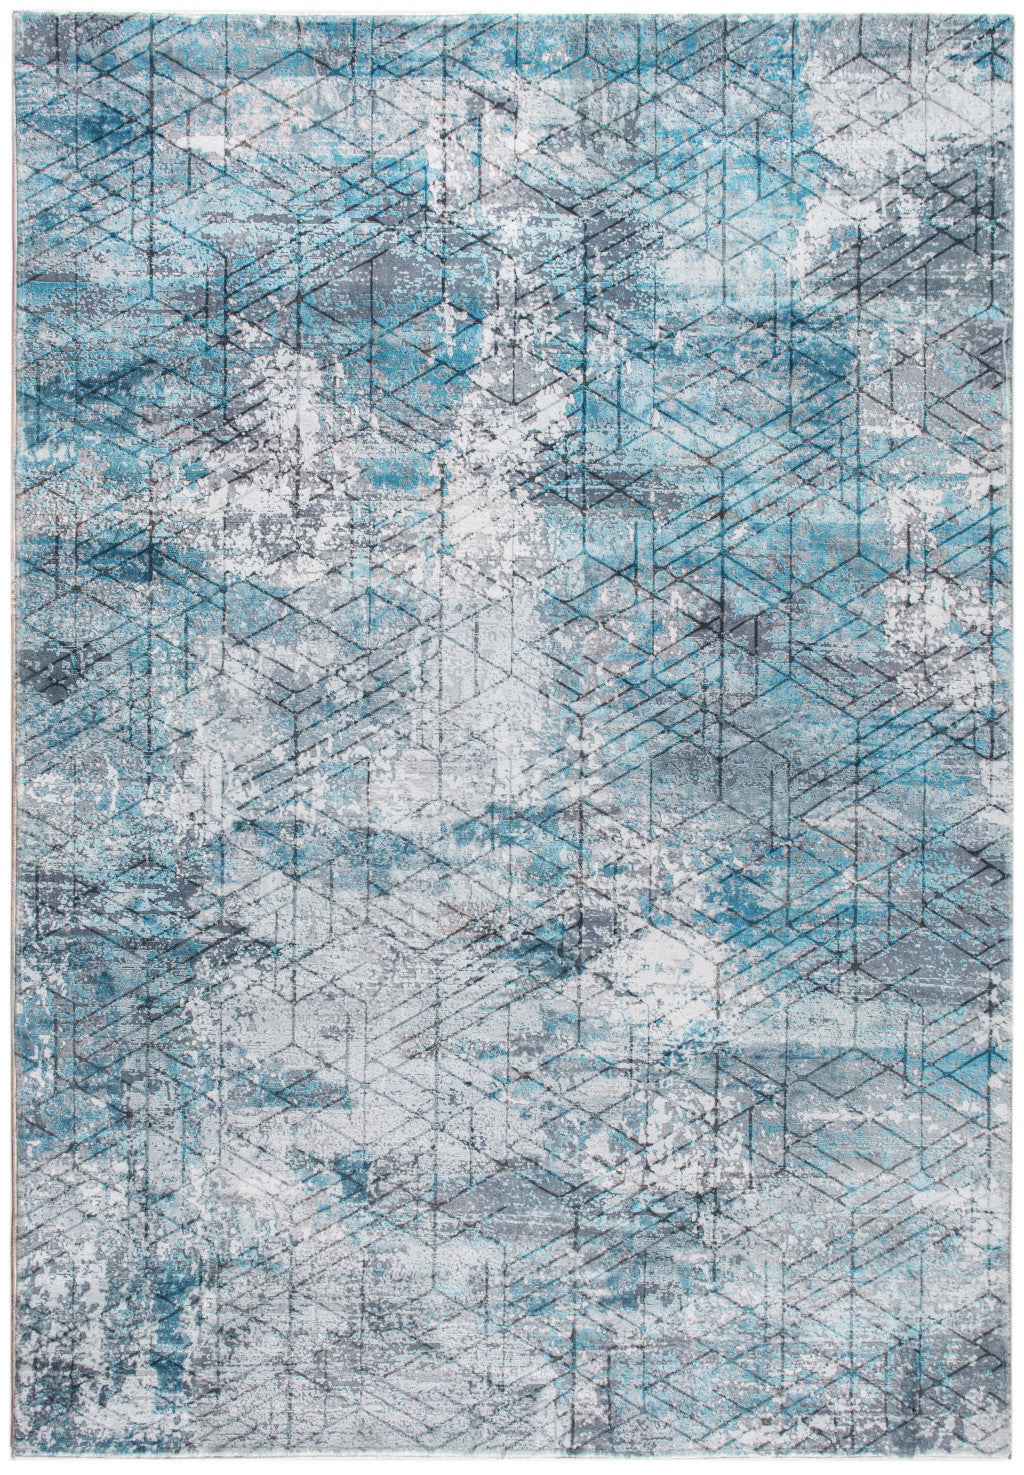 6’ x 9’ Blue Gray Abstract Cuboid Modern Area Rug